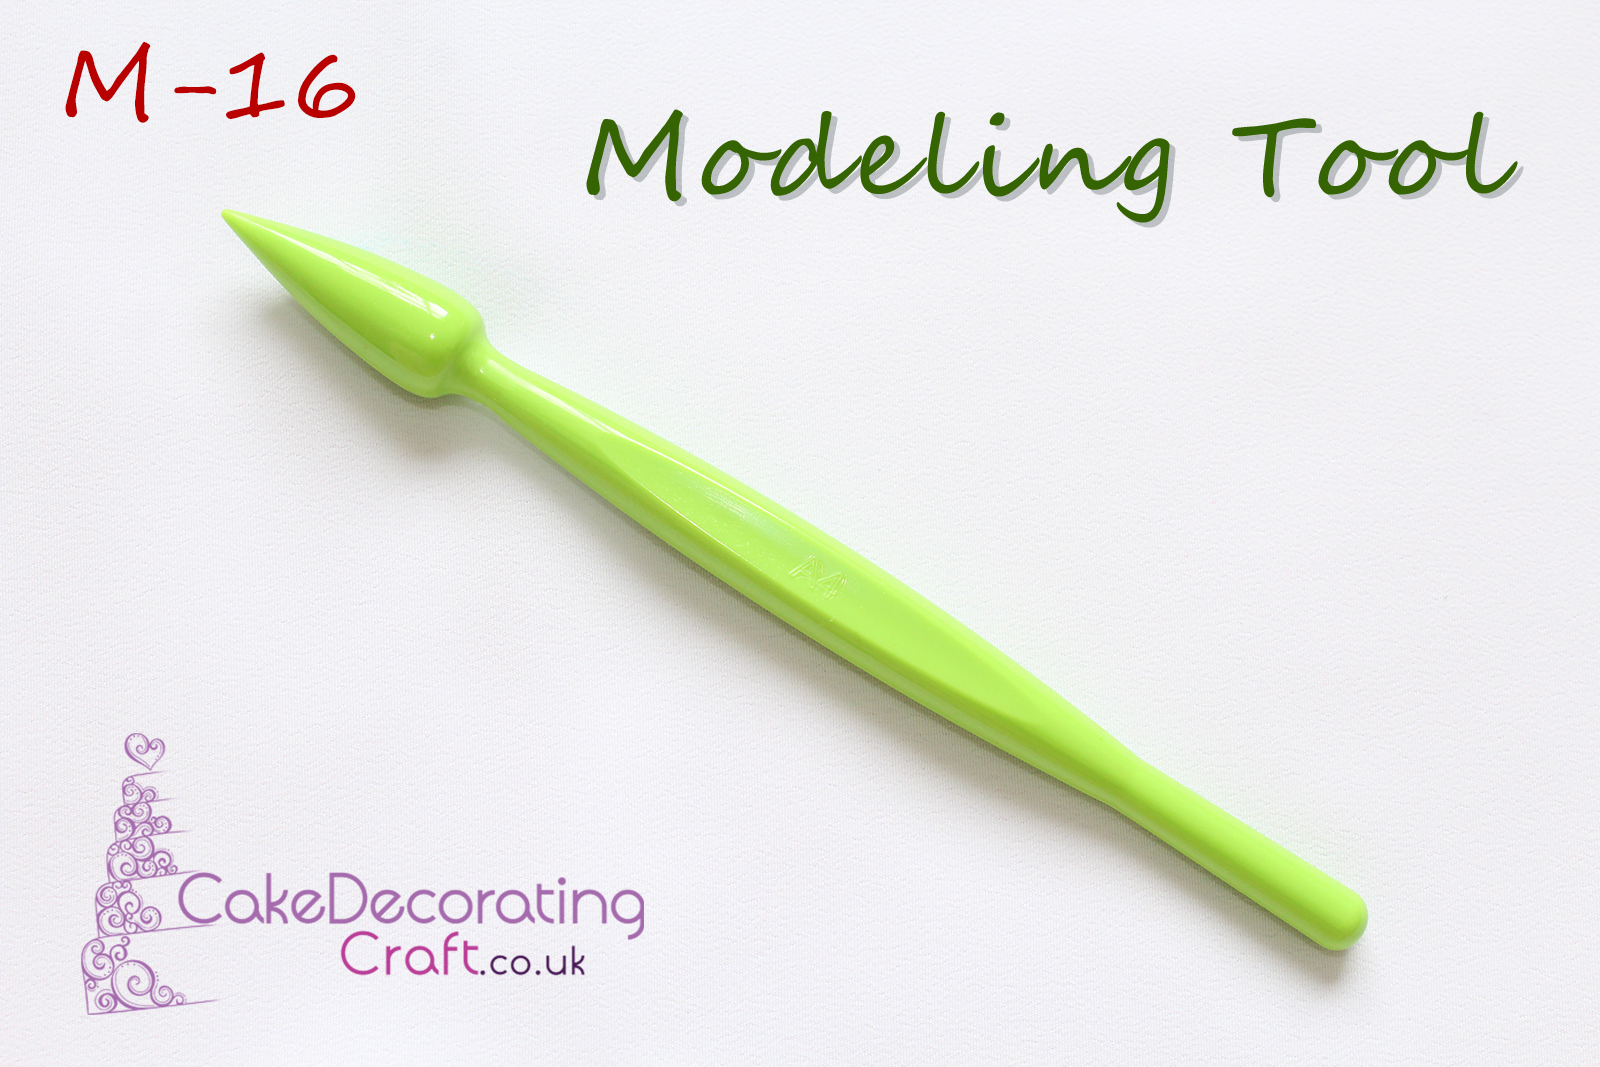 Cake Decorating Craft Modelling Tools | Double Ended | Gum Paste Flower Paste Modelling Sugar Paste Craft | M-16